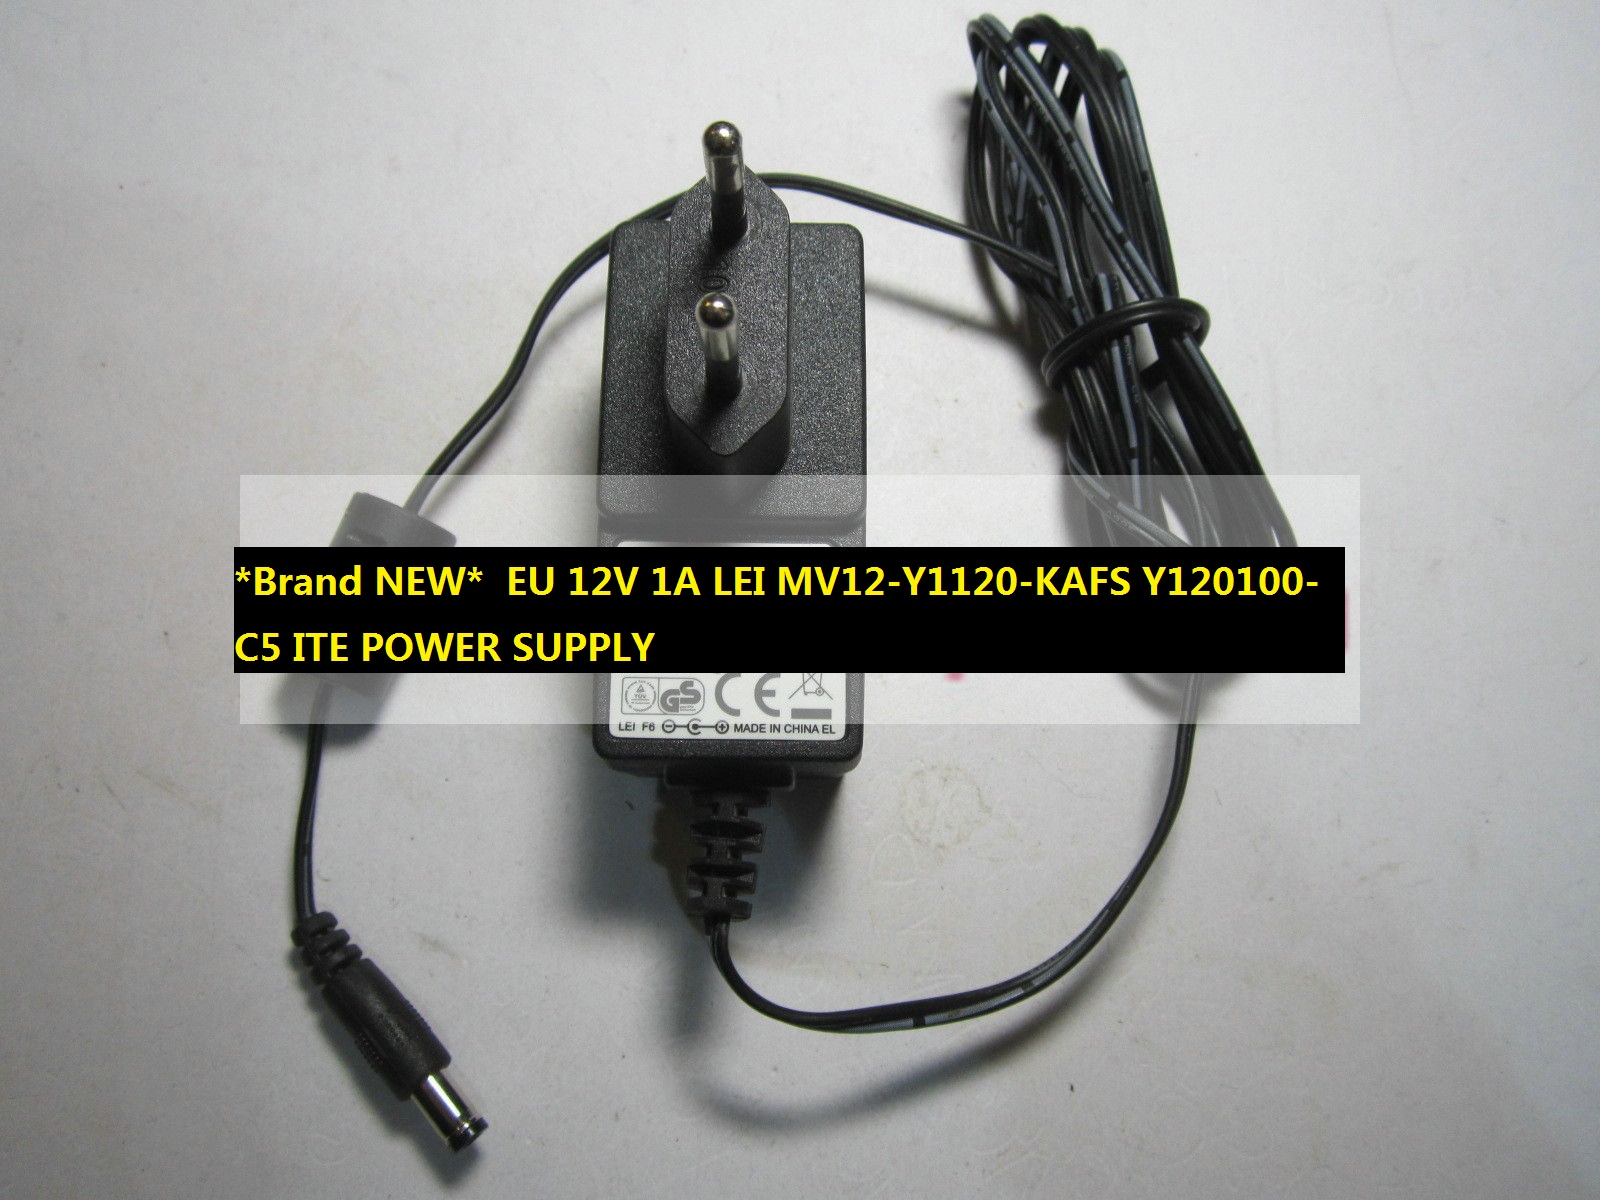 *Brand NEW* EU 12V 1A LEI MV12-Y1120-KAFS Y120100-C5 ITE POWER SUPPLY - Click Image to Close